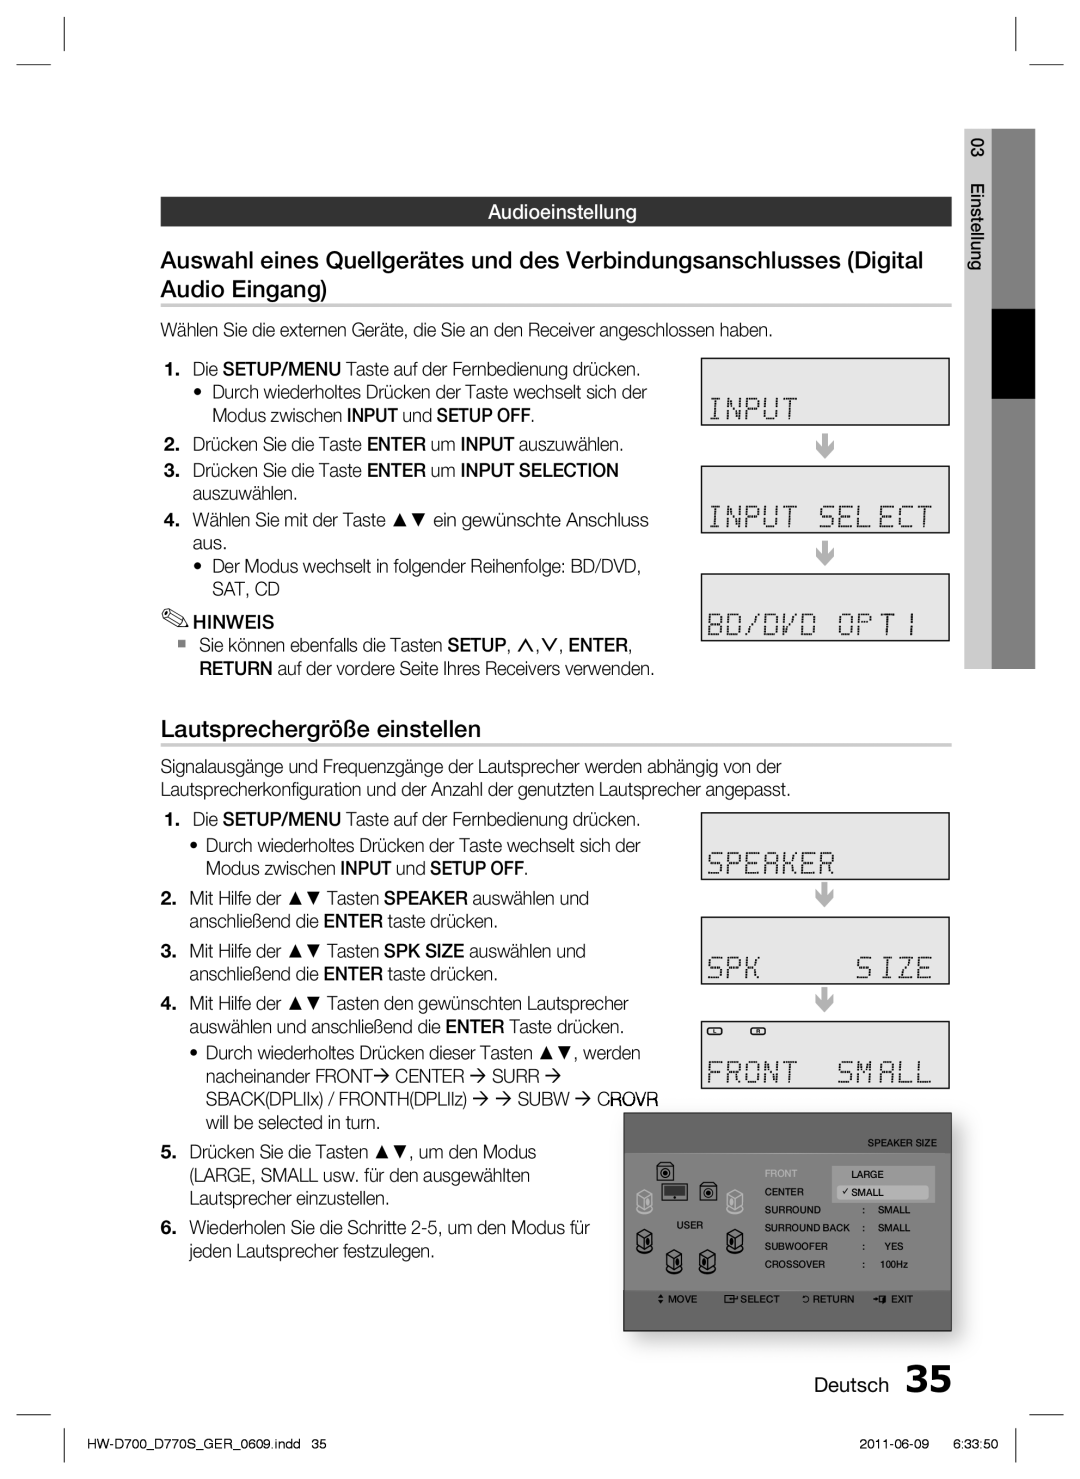 Samsung HW-D700/EN, HW-D770S/EN manual Lautsprechergröße einstellen, Audioeinstellung, Deutsch 